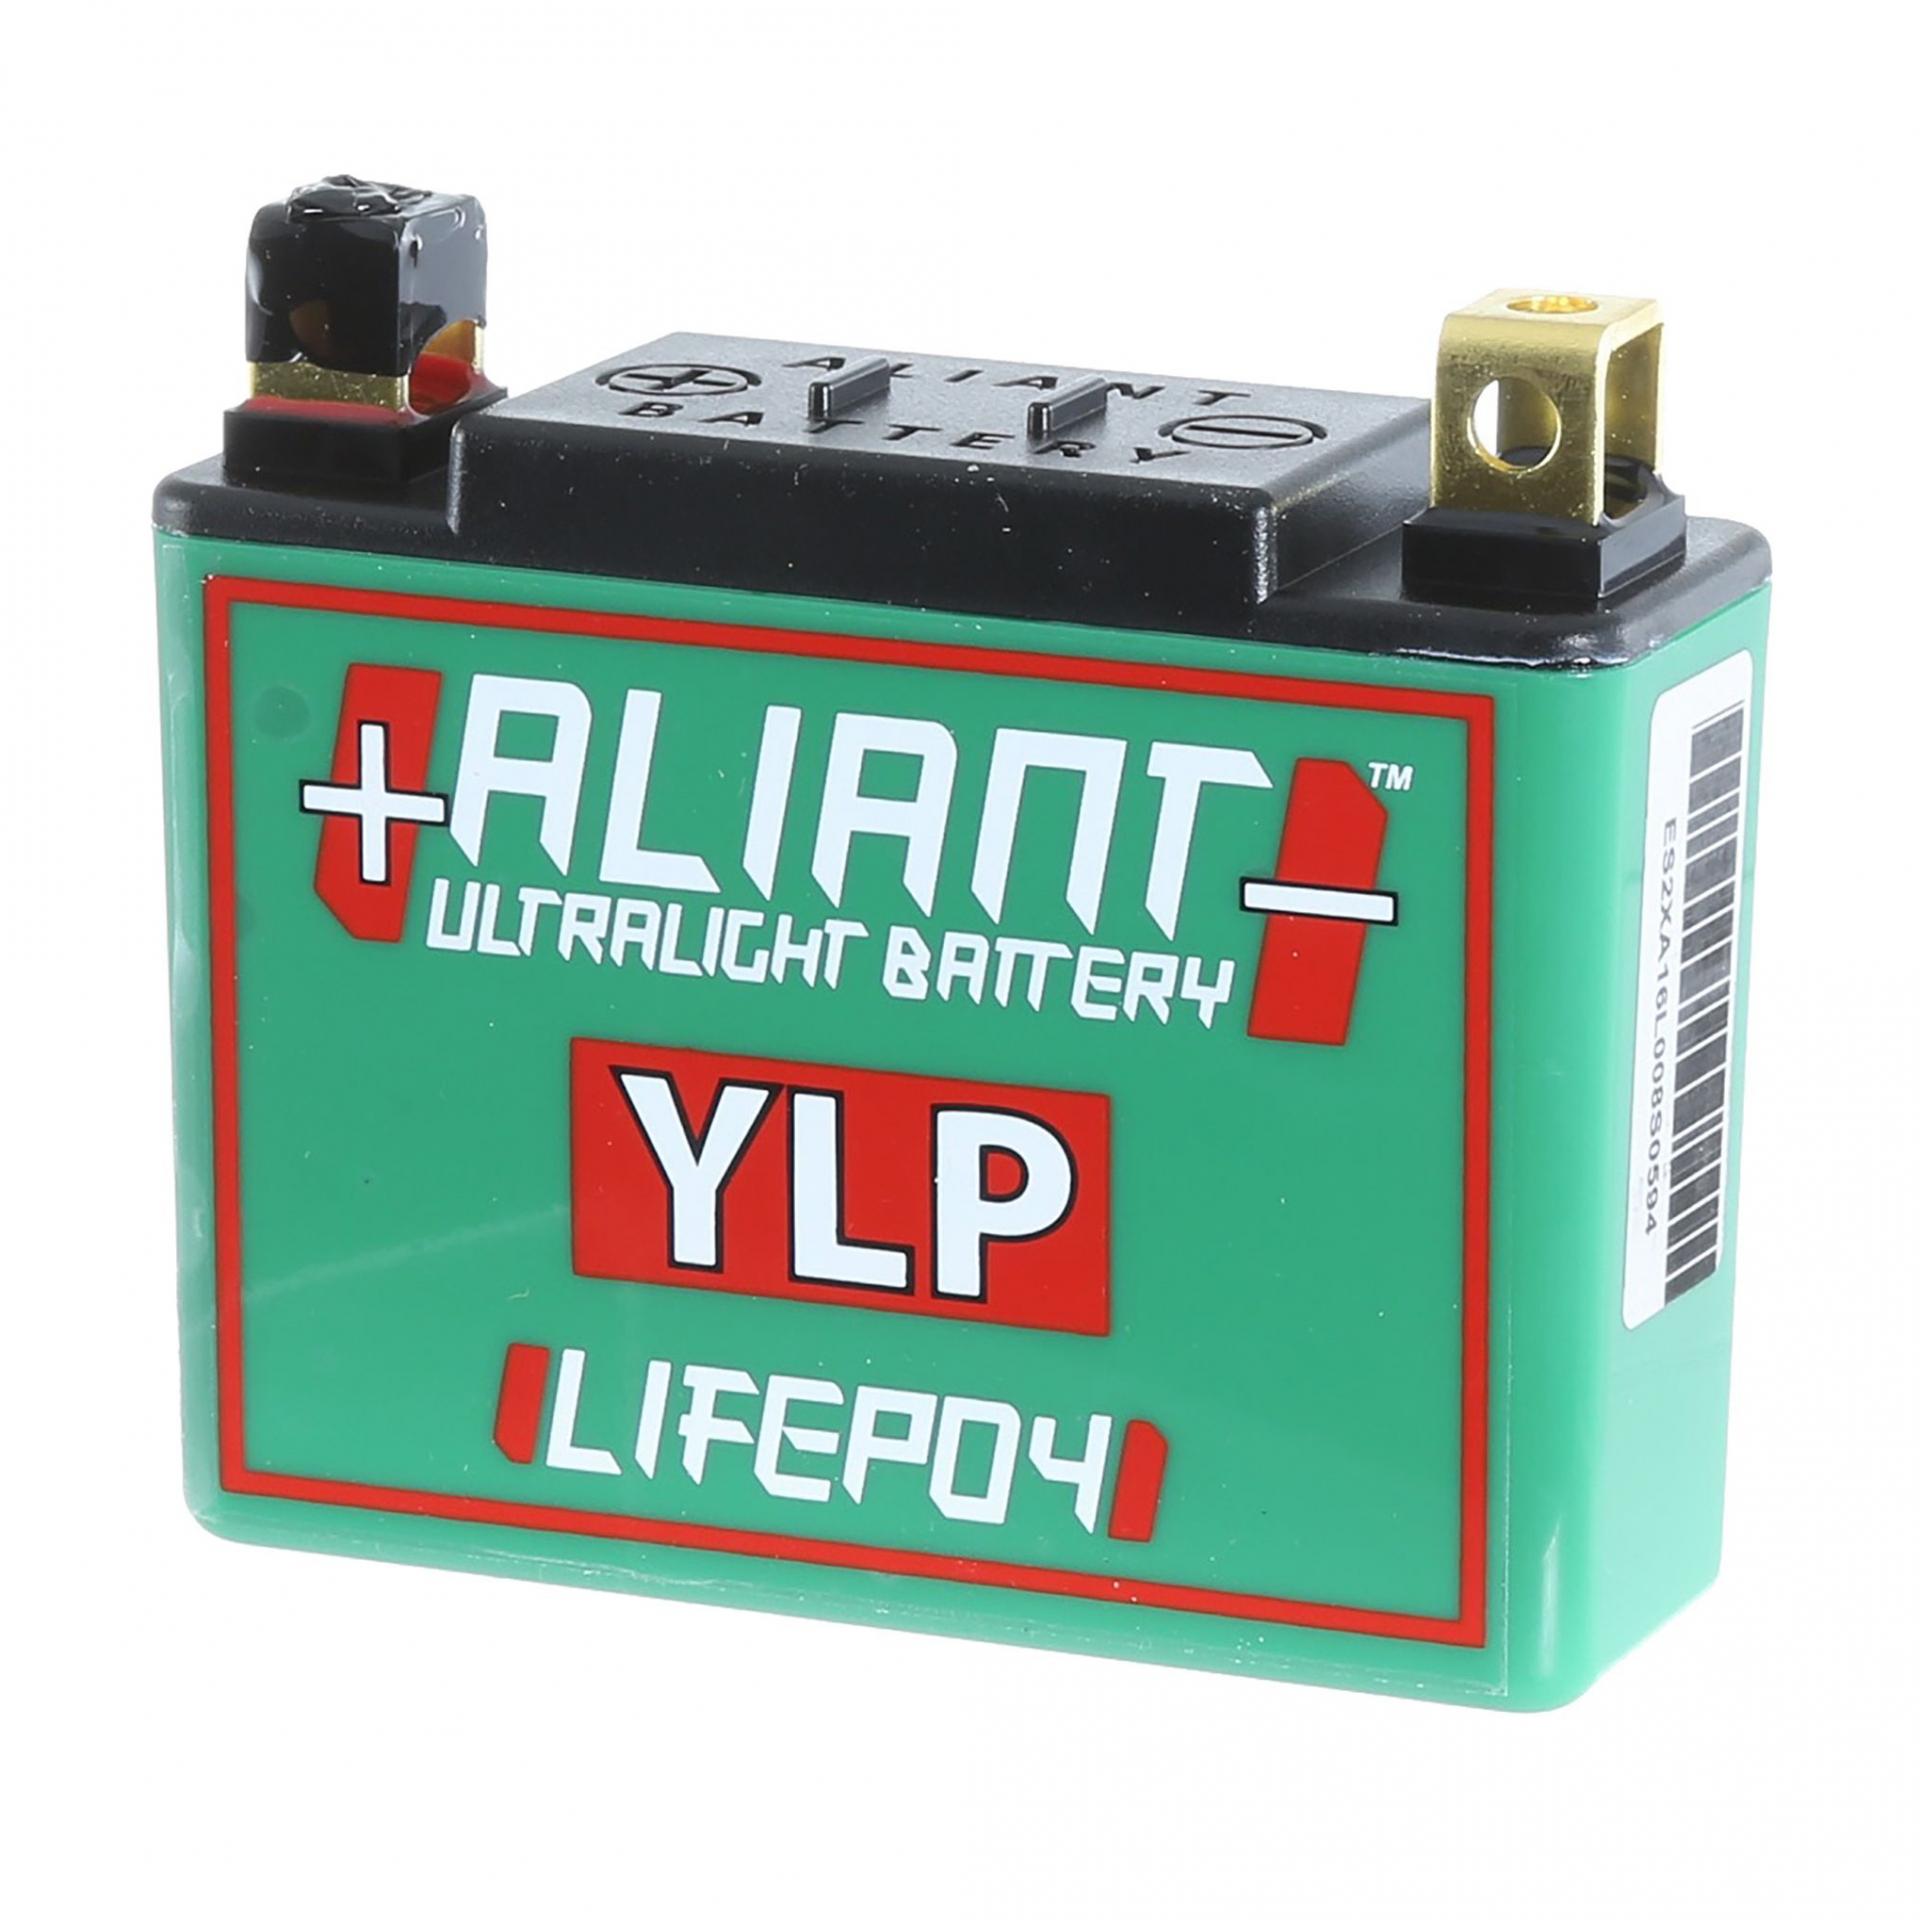 Литиевый аккумулятор для мотоцикла. Аккумулятор Aliant ylp07. Литиевые мото аккумуляторы lifepo4. Литий-железо фосфатный аккумулятор Aliant YLP 07 lifepo4. Аккумулятор - lifepo4 Aliant.